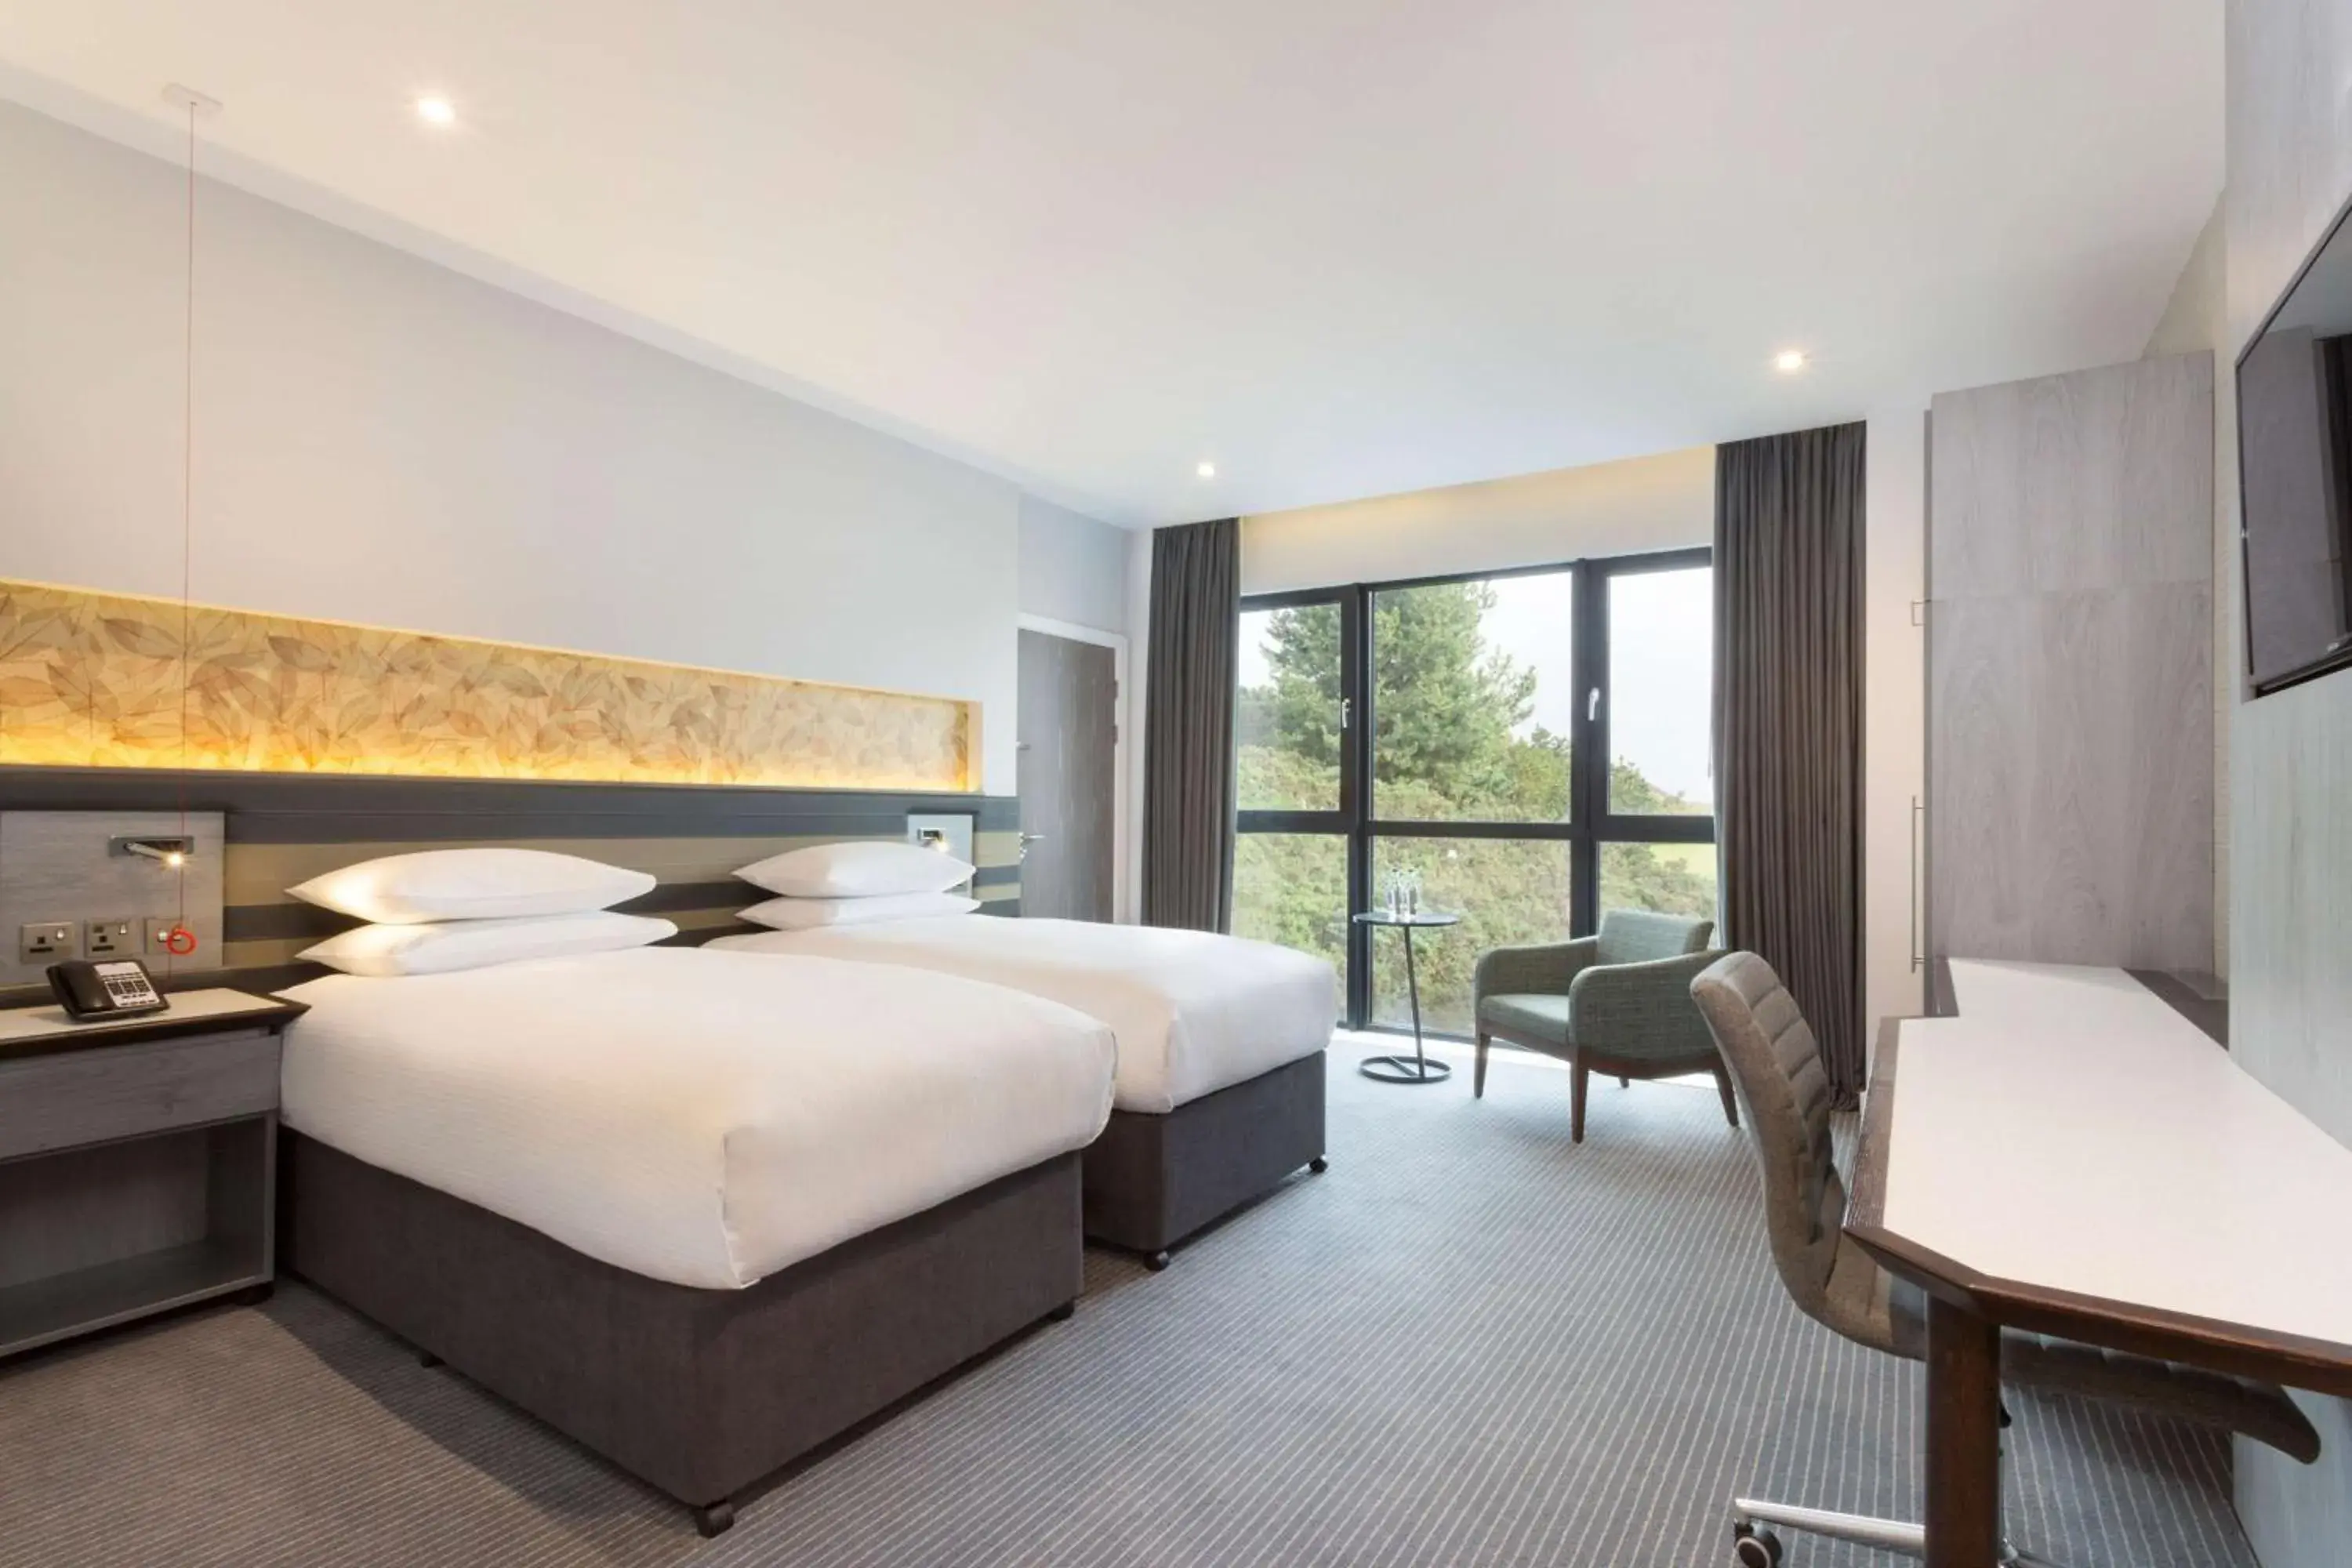 Bedroom in DoubleTree by Hilton Edinburgh - Queensferry Crossing